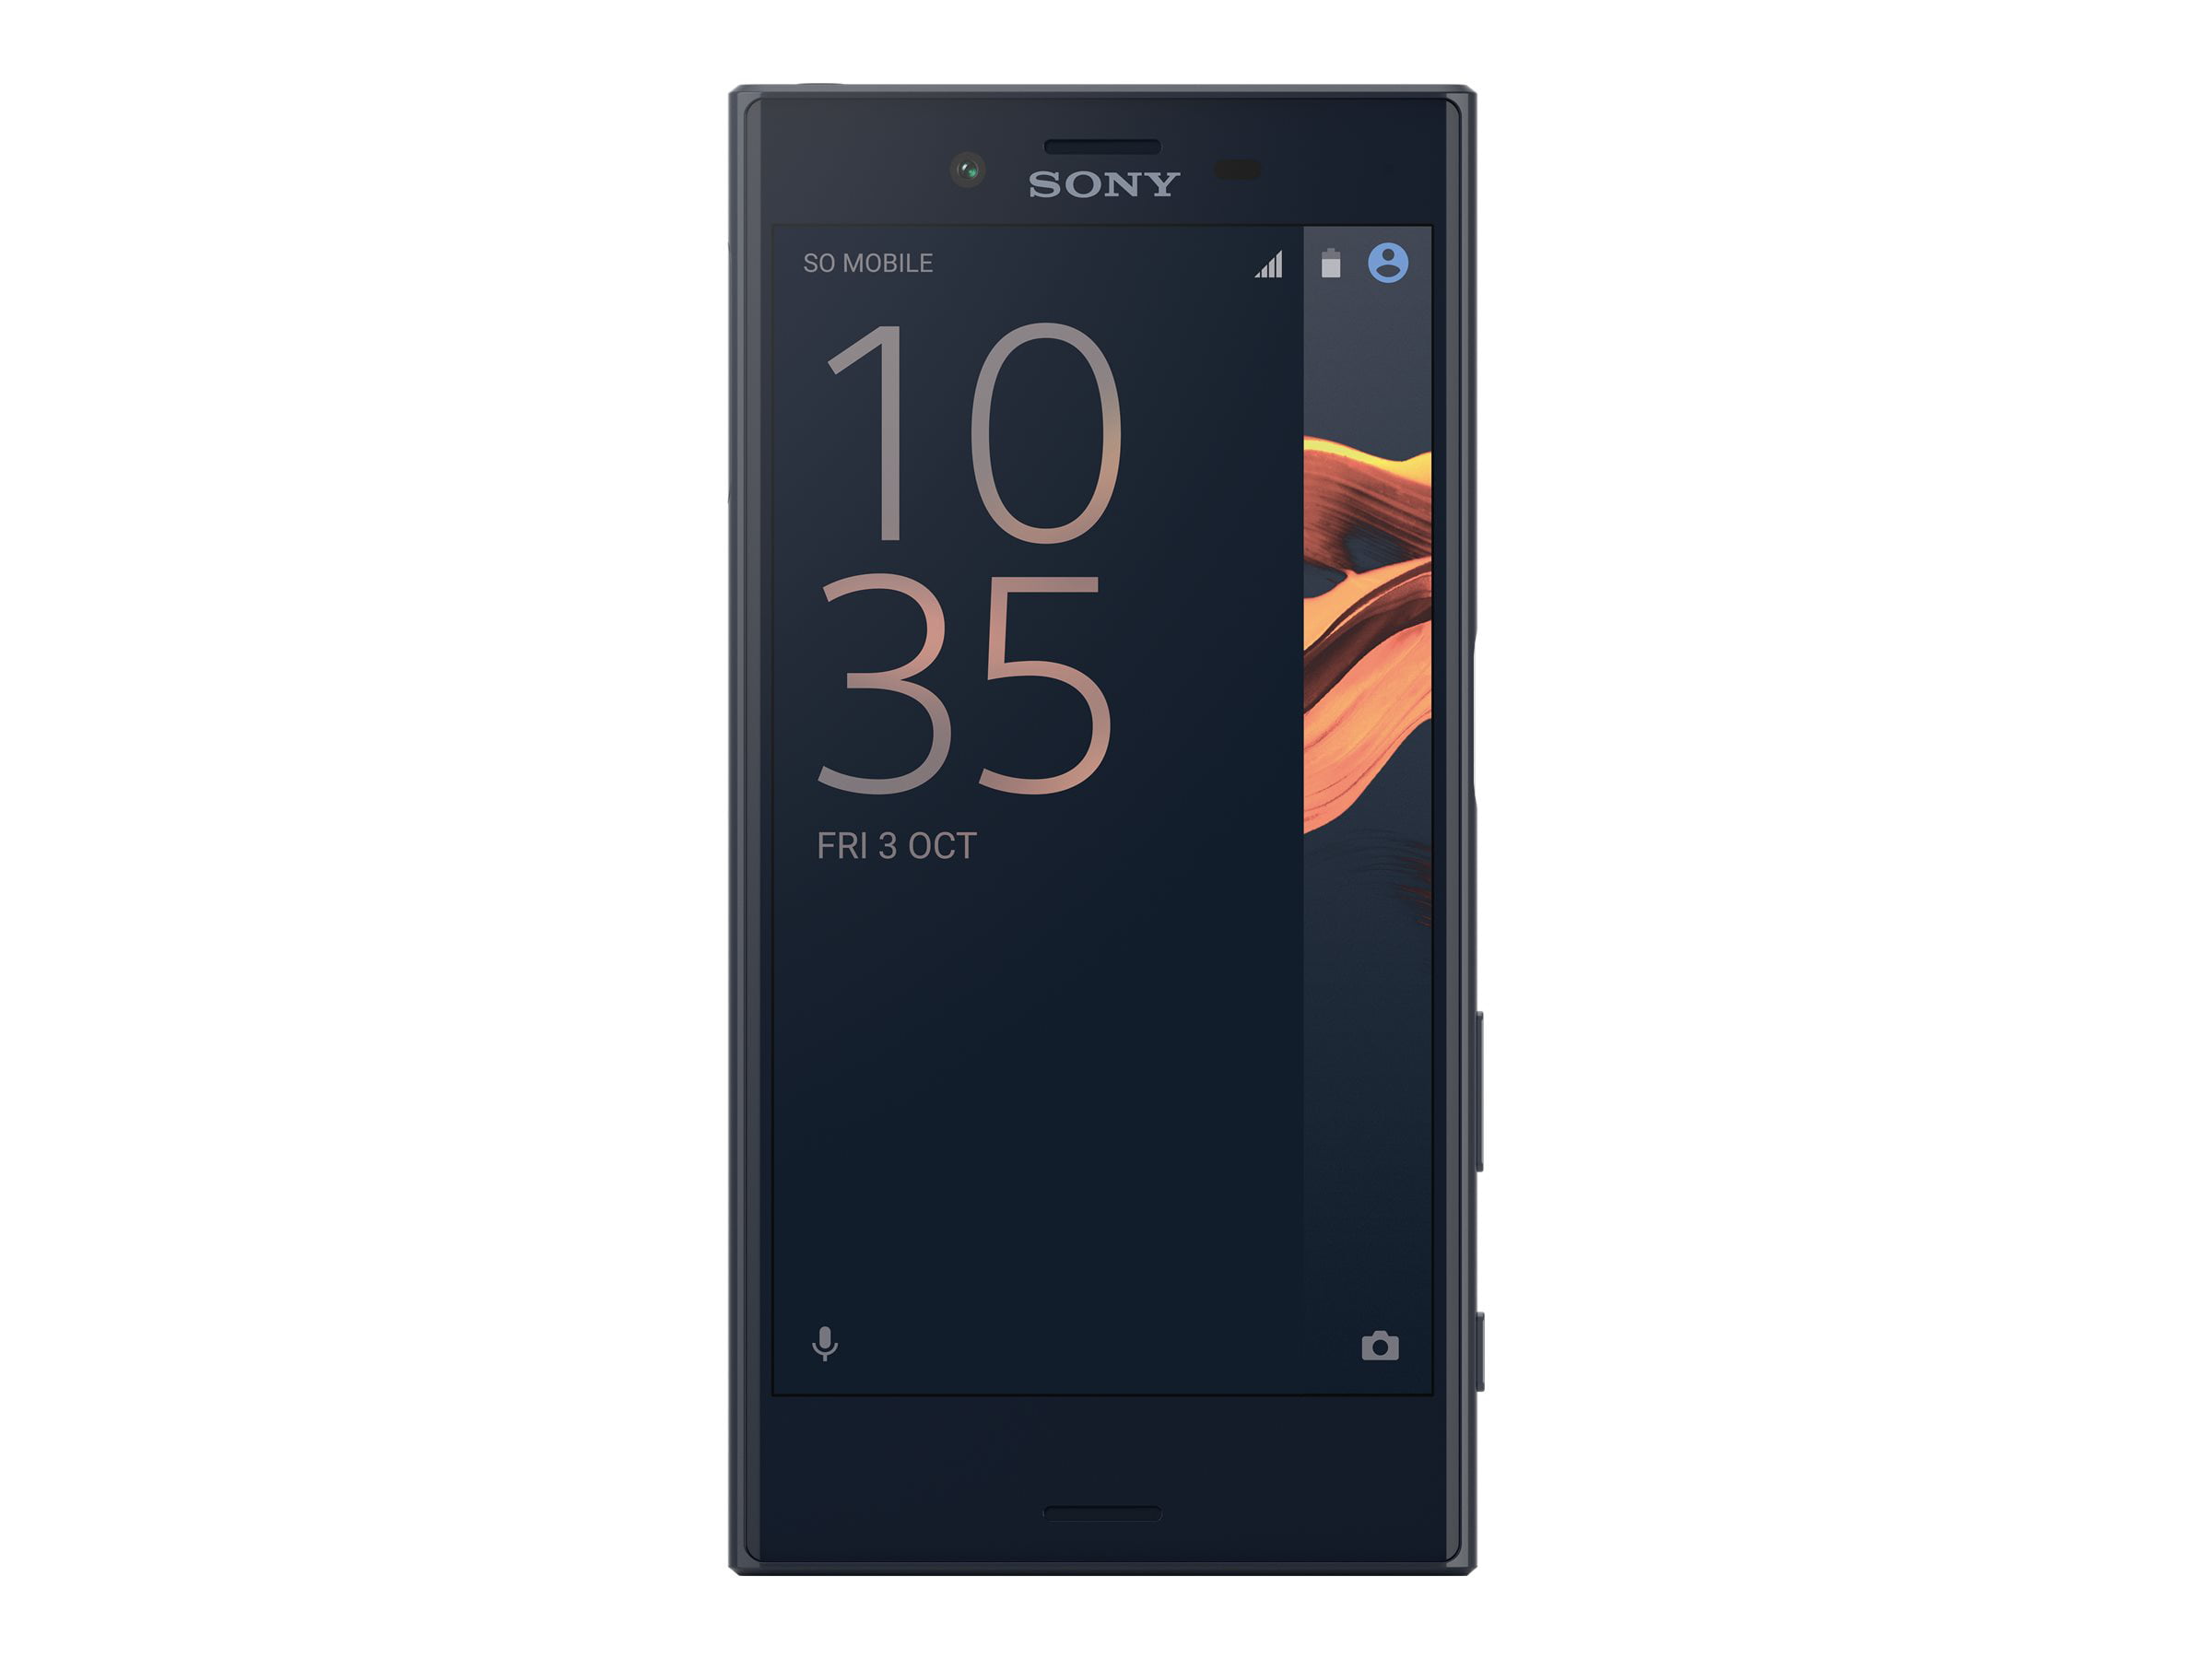 Ondraaglijk Terug kijken hybride Sony XPERIA X Compact - 4G smartphone - RAM 3 GB / 32 GB - microSD slot -  LCD display - 4.6" - 1280 x 720 pixels - rear camera 23 MP - front camera 5  MP - universe black - Walmart.com